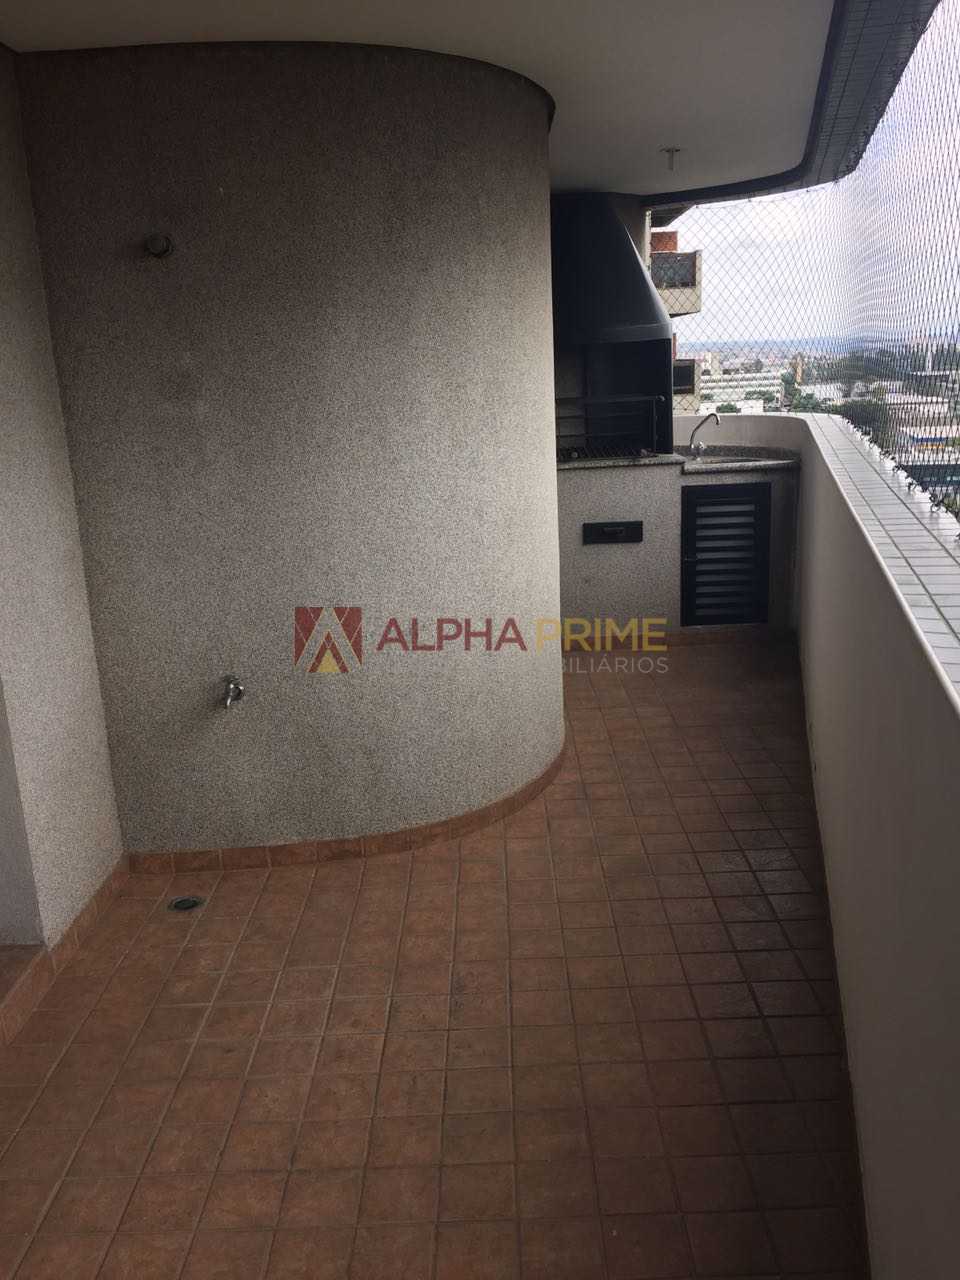  - Alpha Prime